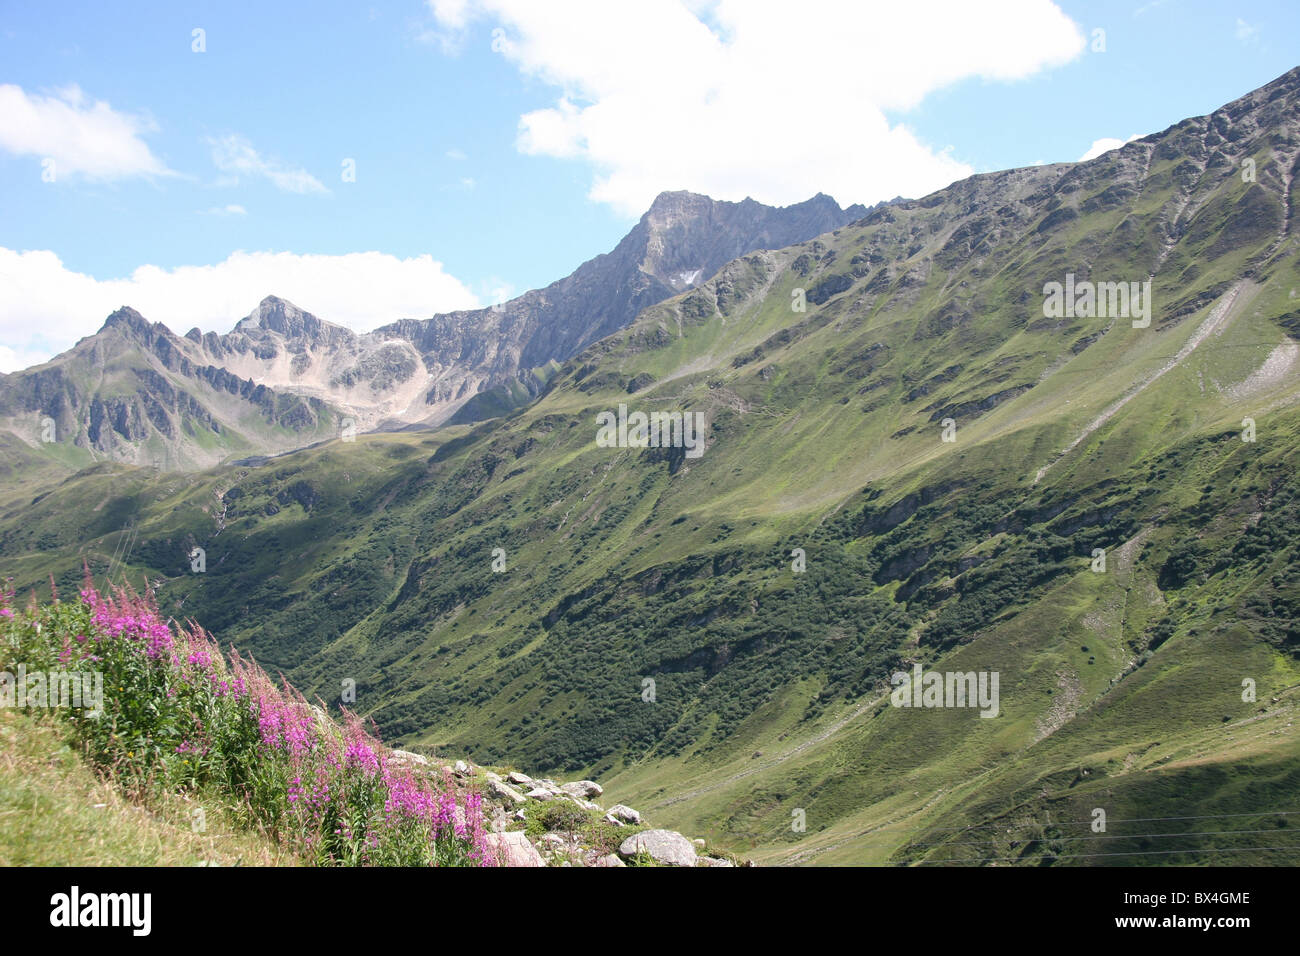 Switzerland Europe Ticino Valais Nufenen pass mountains Alps flowers Stock Photo